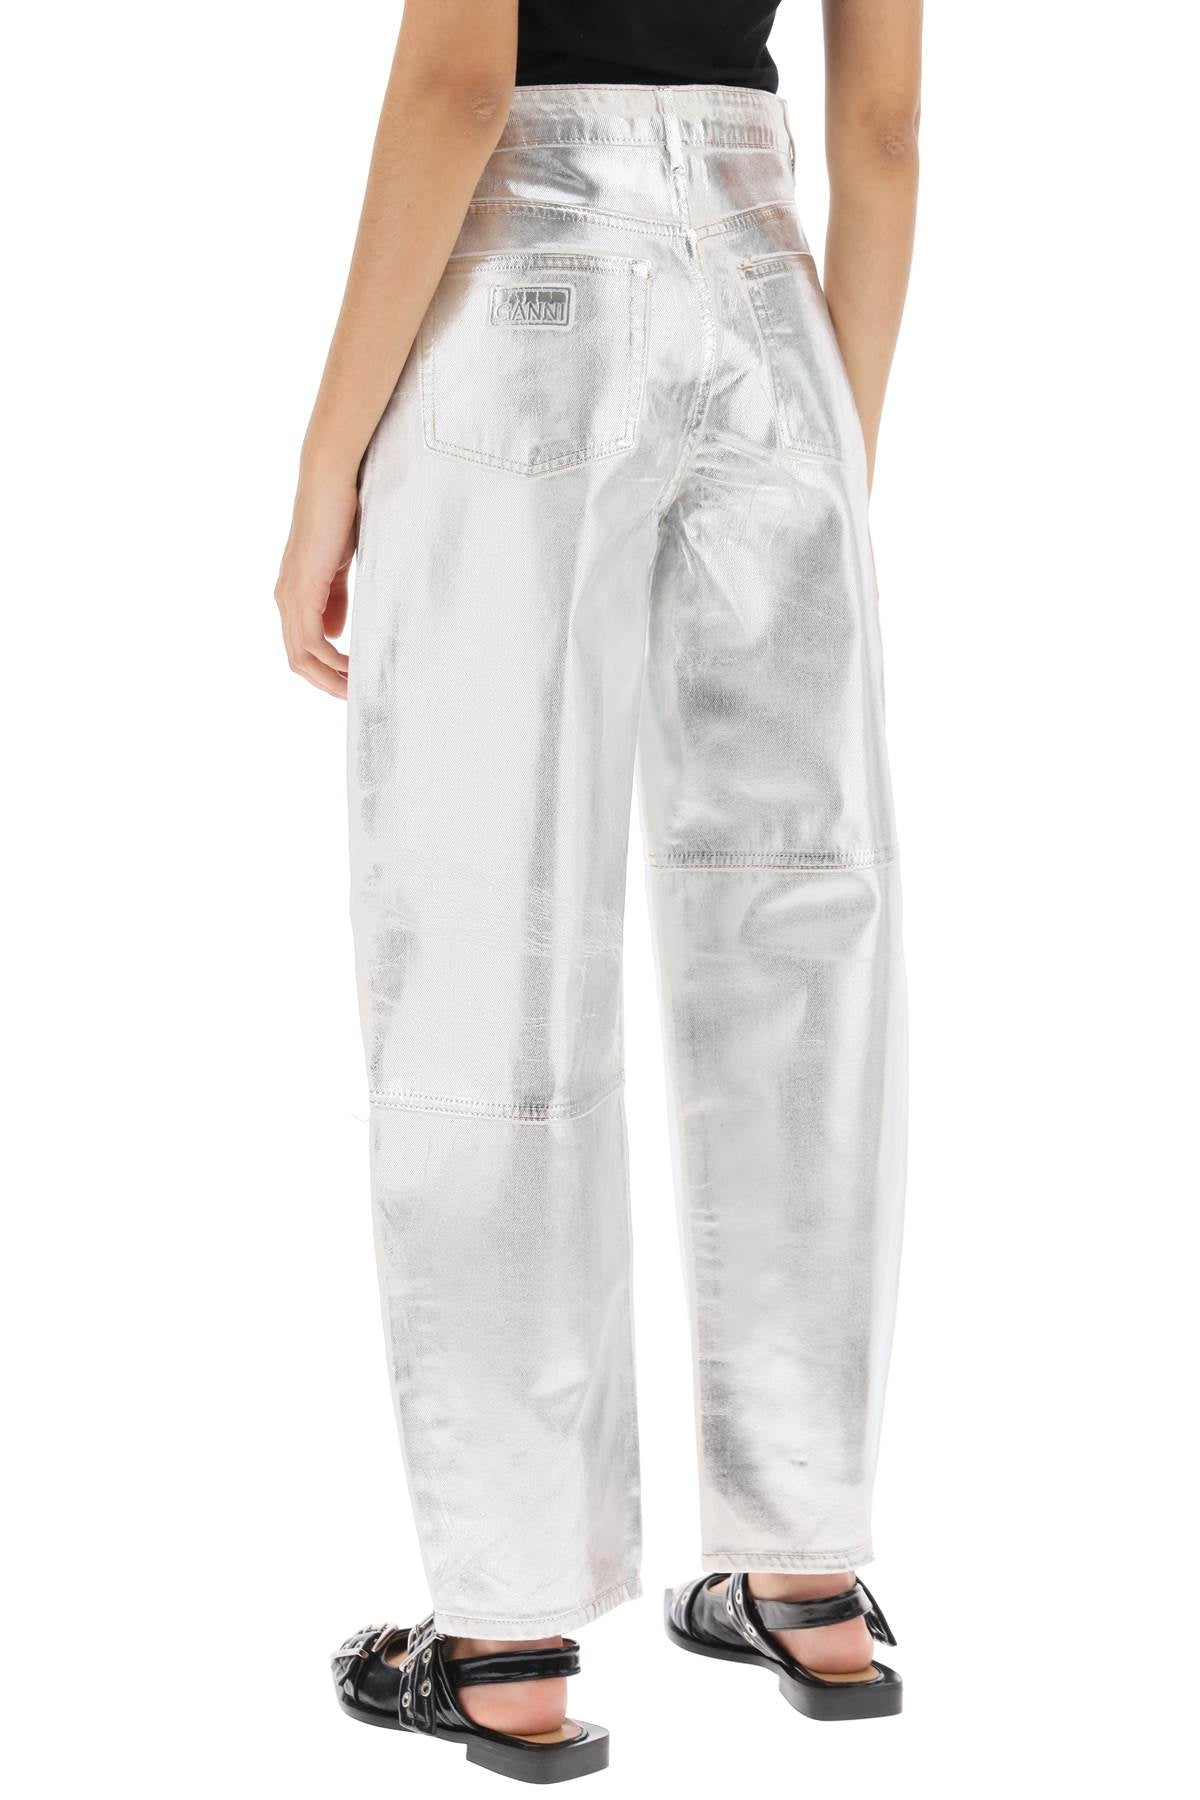 GANNI Metallic Starry Denim Pants for Women